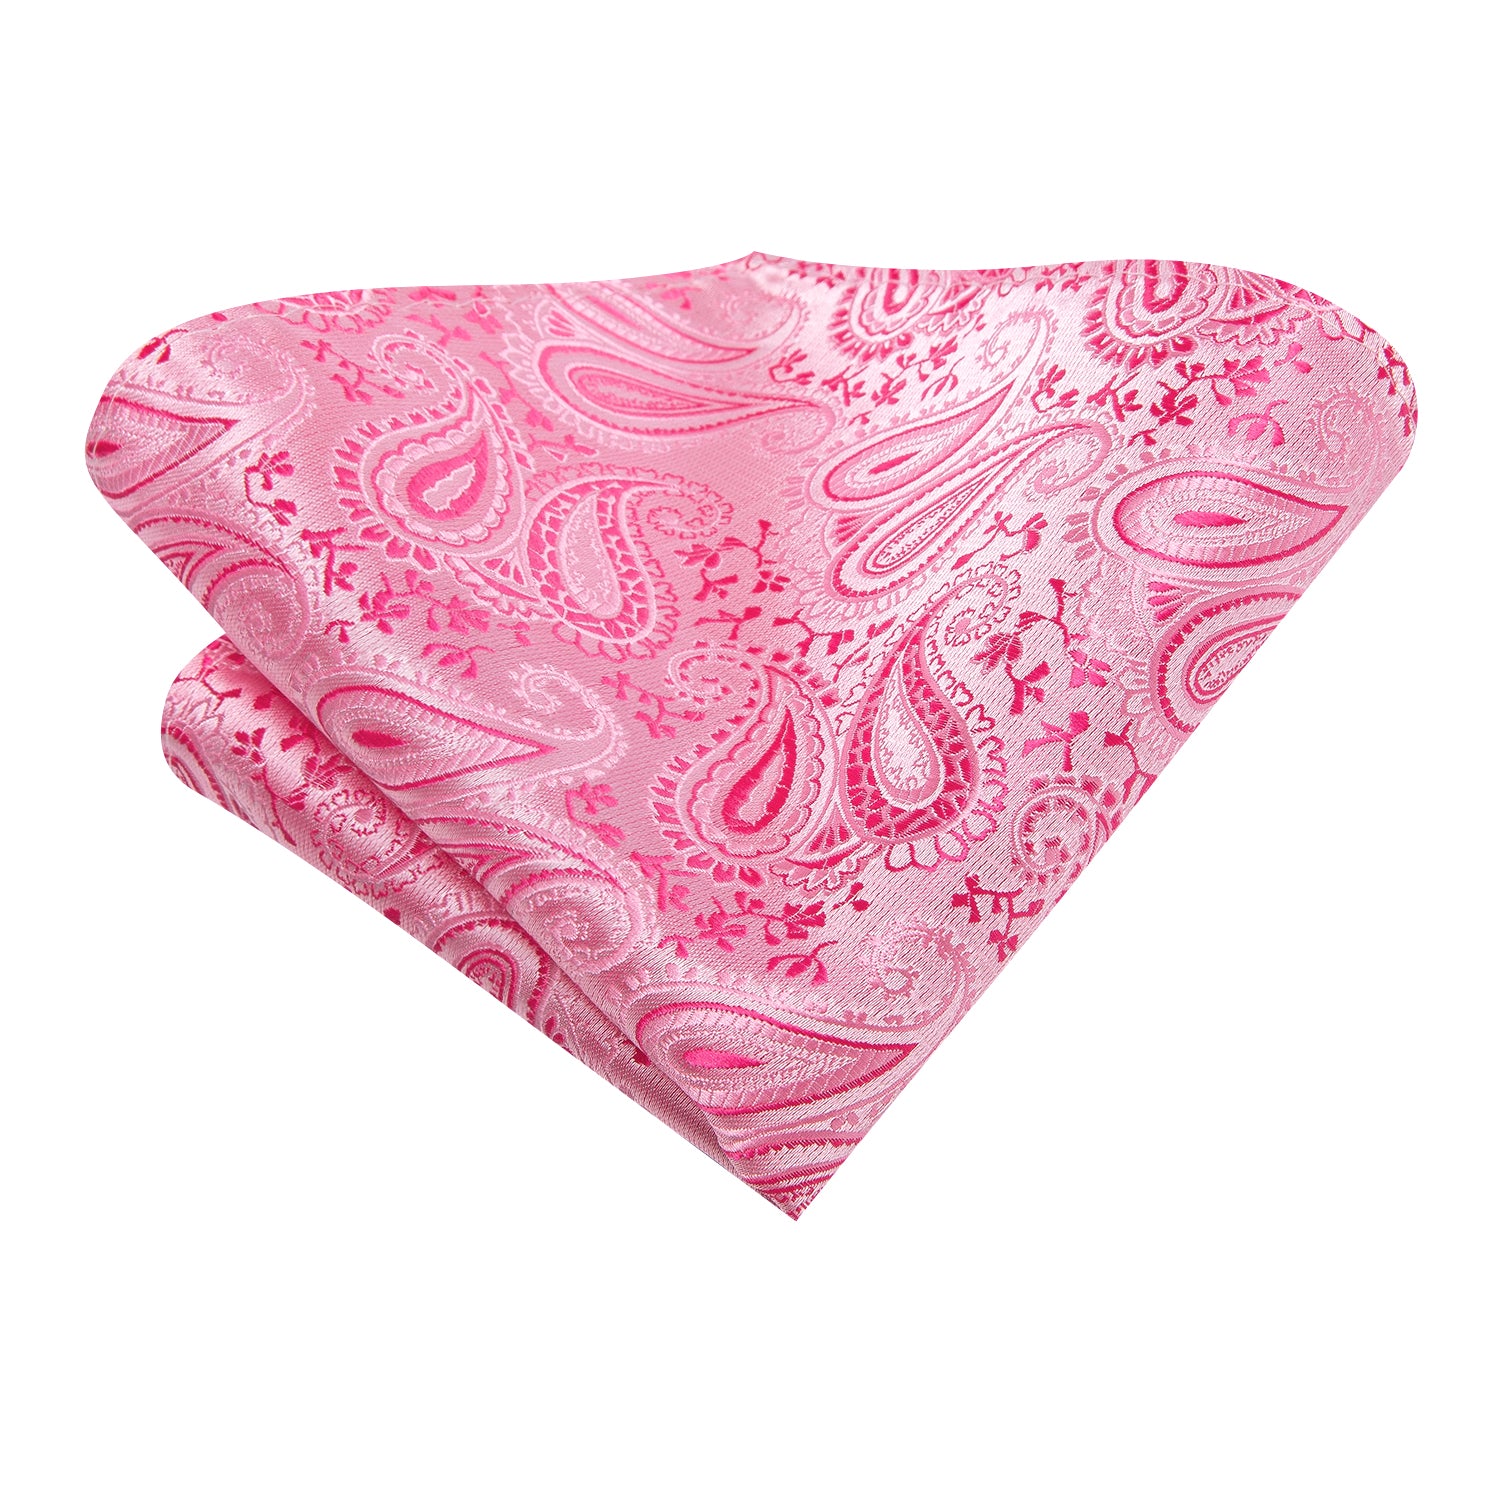 Pink Paisley 67 Inches Extra Long Tie Handkerchief Cufflinks Set